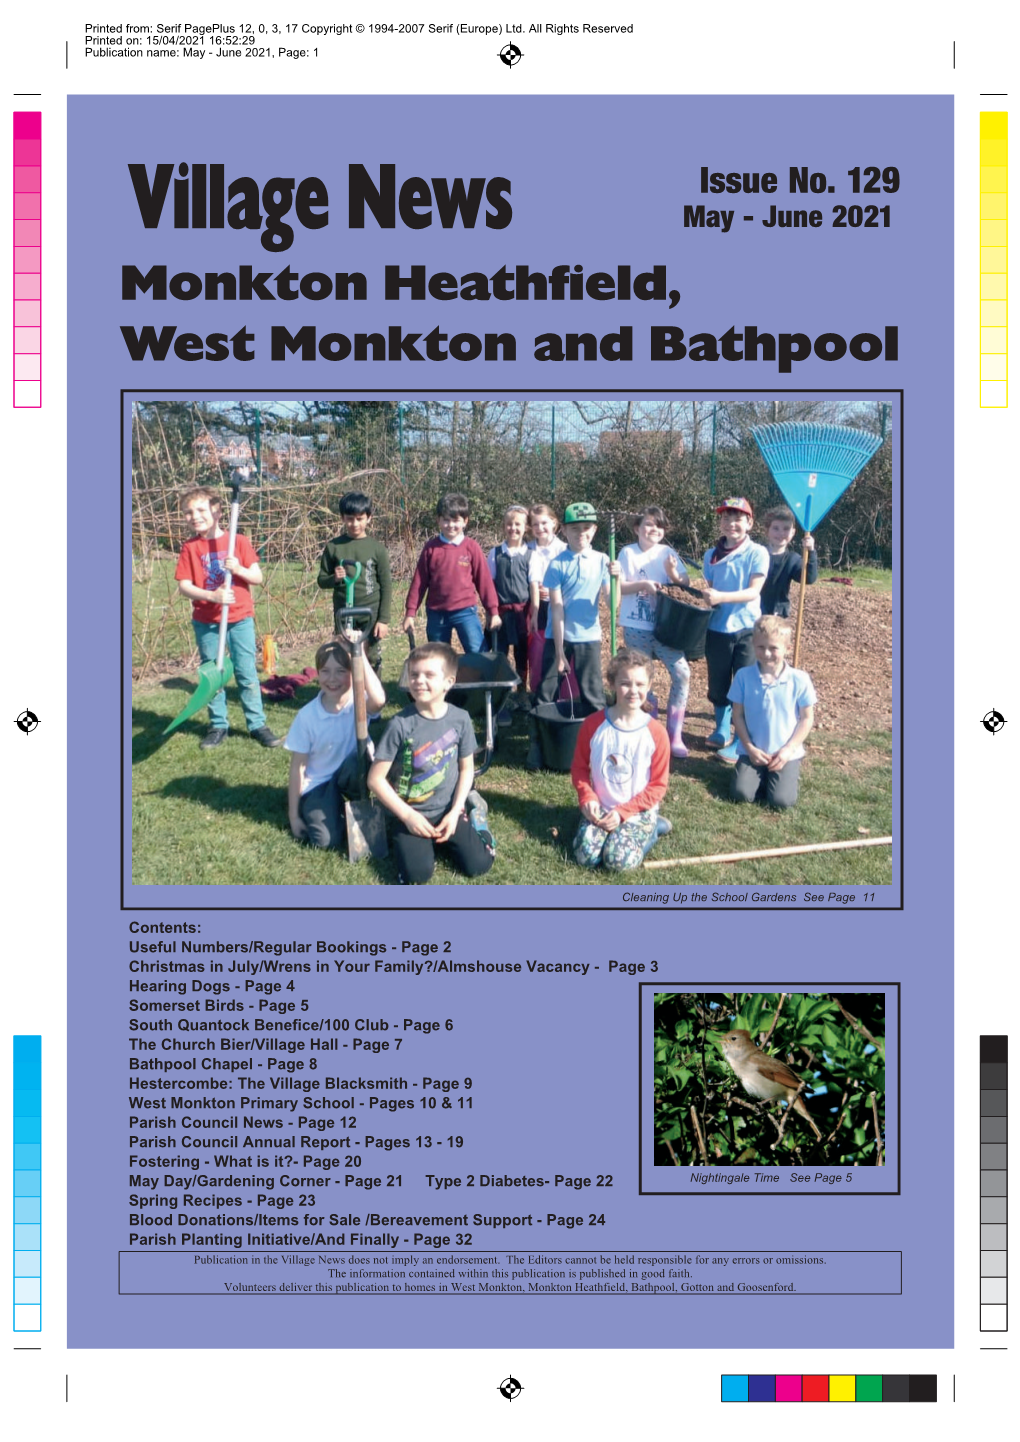 June 2021 Monkton Heathfield, West Monkton and Bathpool